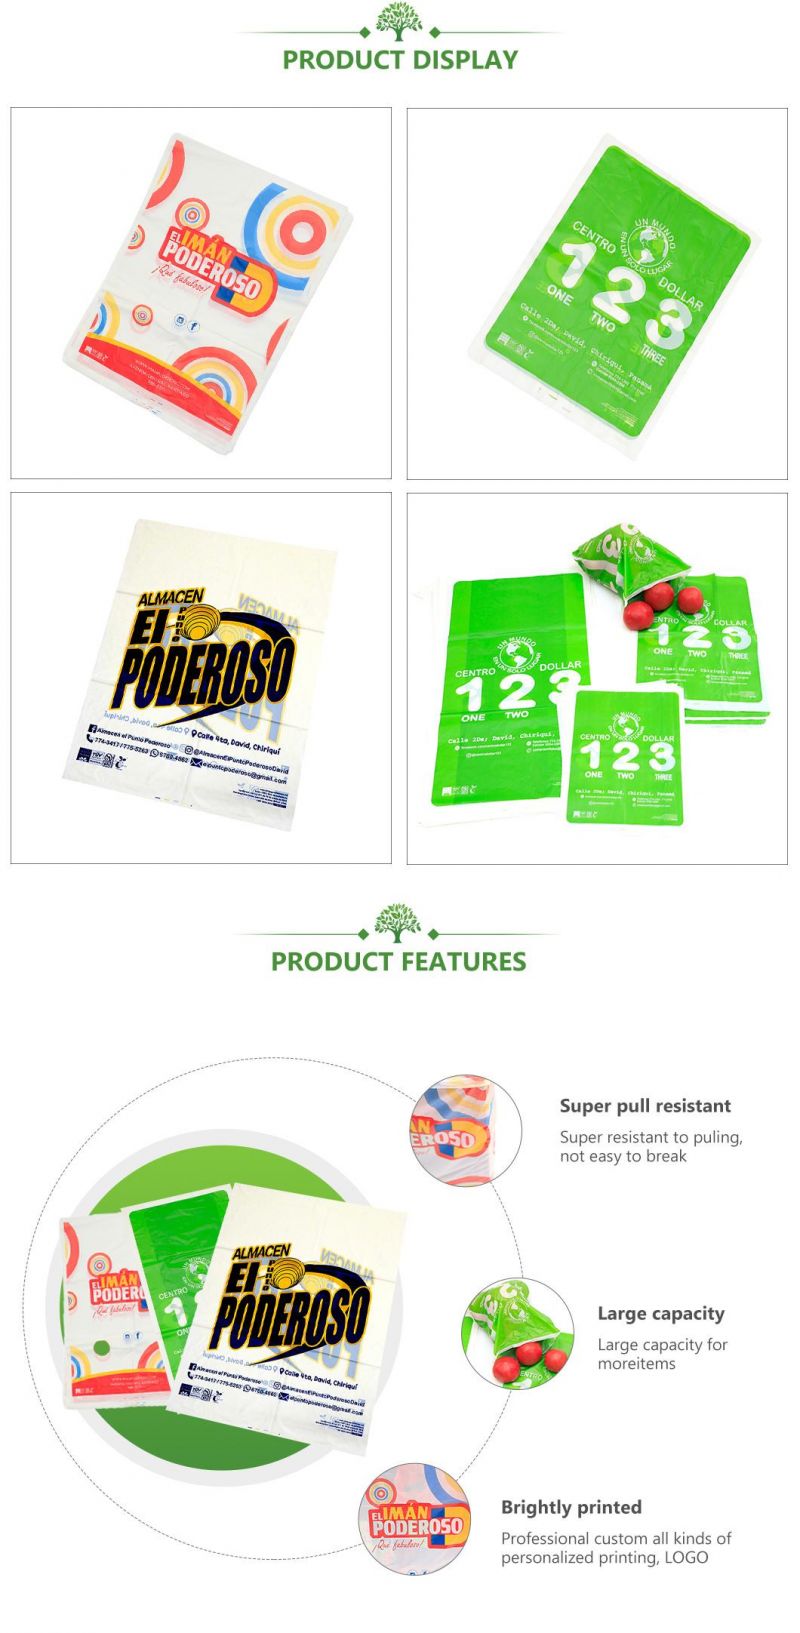 PLA+Pbat/Pbat+Corn Starch Biodegradable Bags, Compostable Bags, Vegetable Bags for School